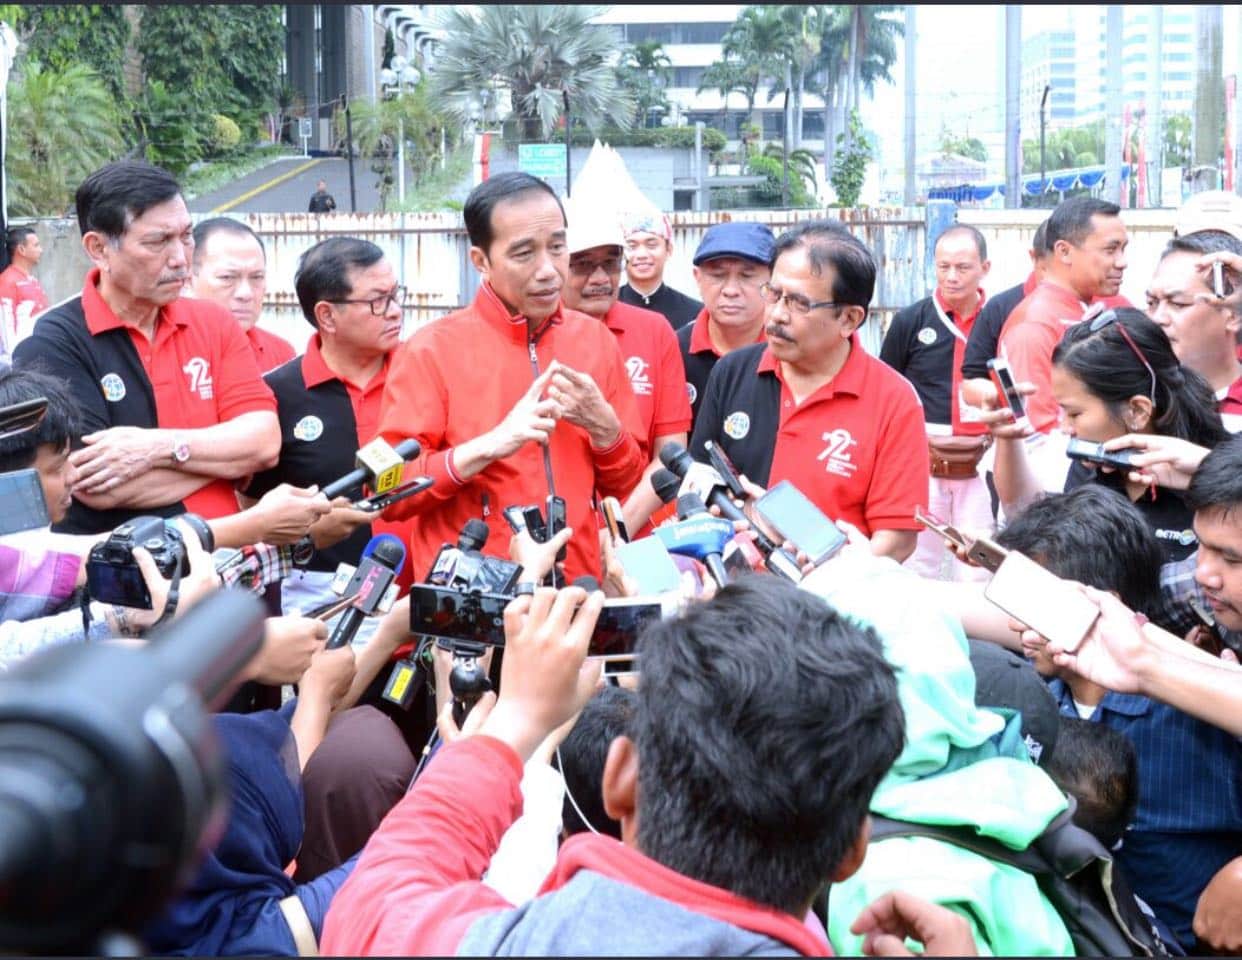 Menko Maritim Luhut B. Pandjaitan Dampingi Presiden Jokowi Bersepeda Usai Hadiri Acara Penyerahan Sertifikat Hak Atas Tanah Ke 7.486 Warga Jabodetabek